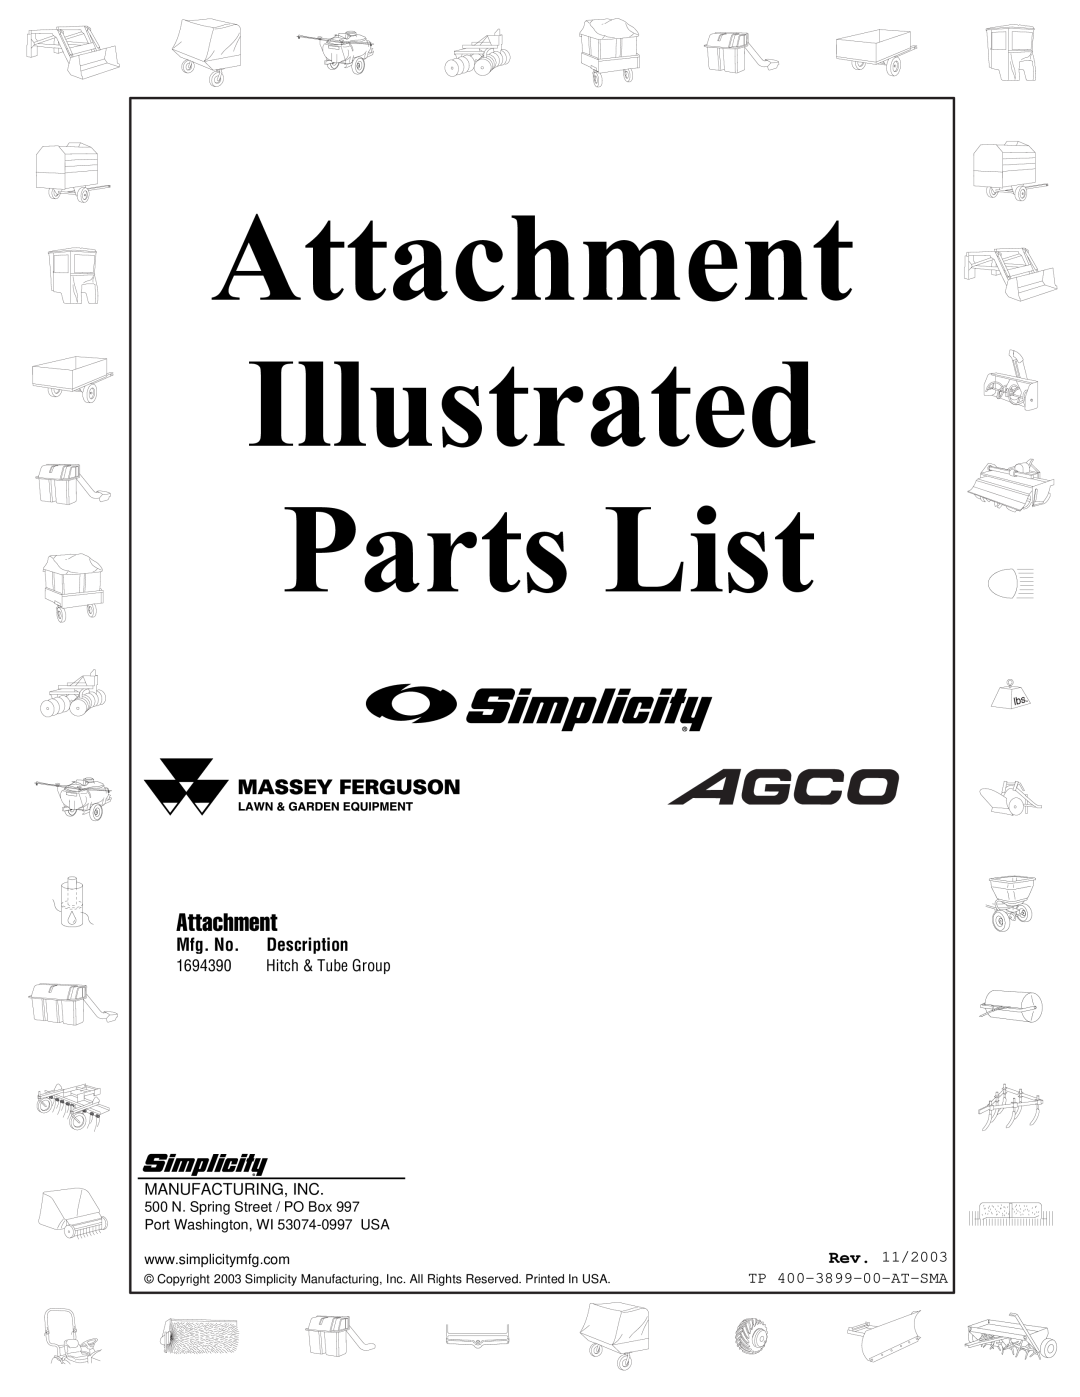 Snapper manual Mfg. No. Description, Rev. 11/2003, TP 400-3899-00-AT-SMA, Attachment Illustrated Parts List 